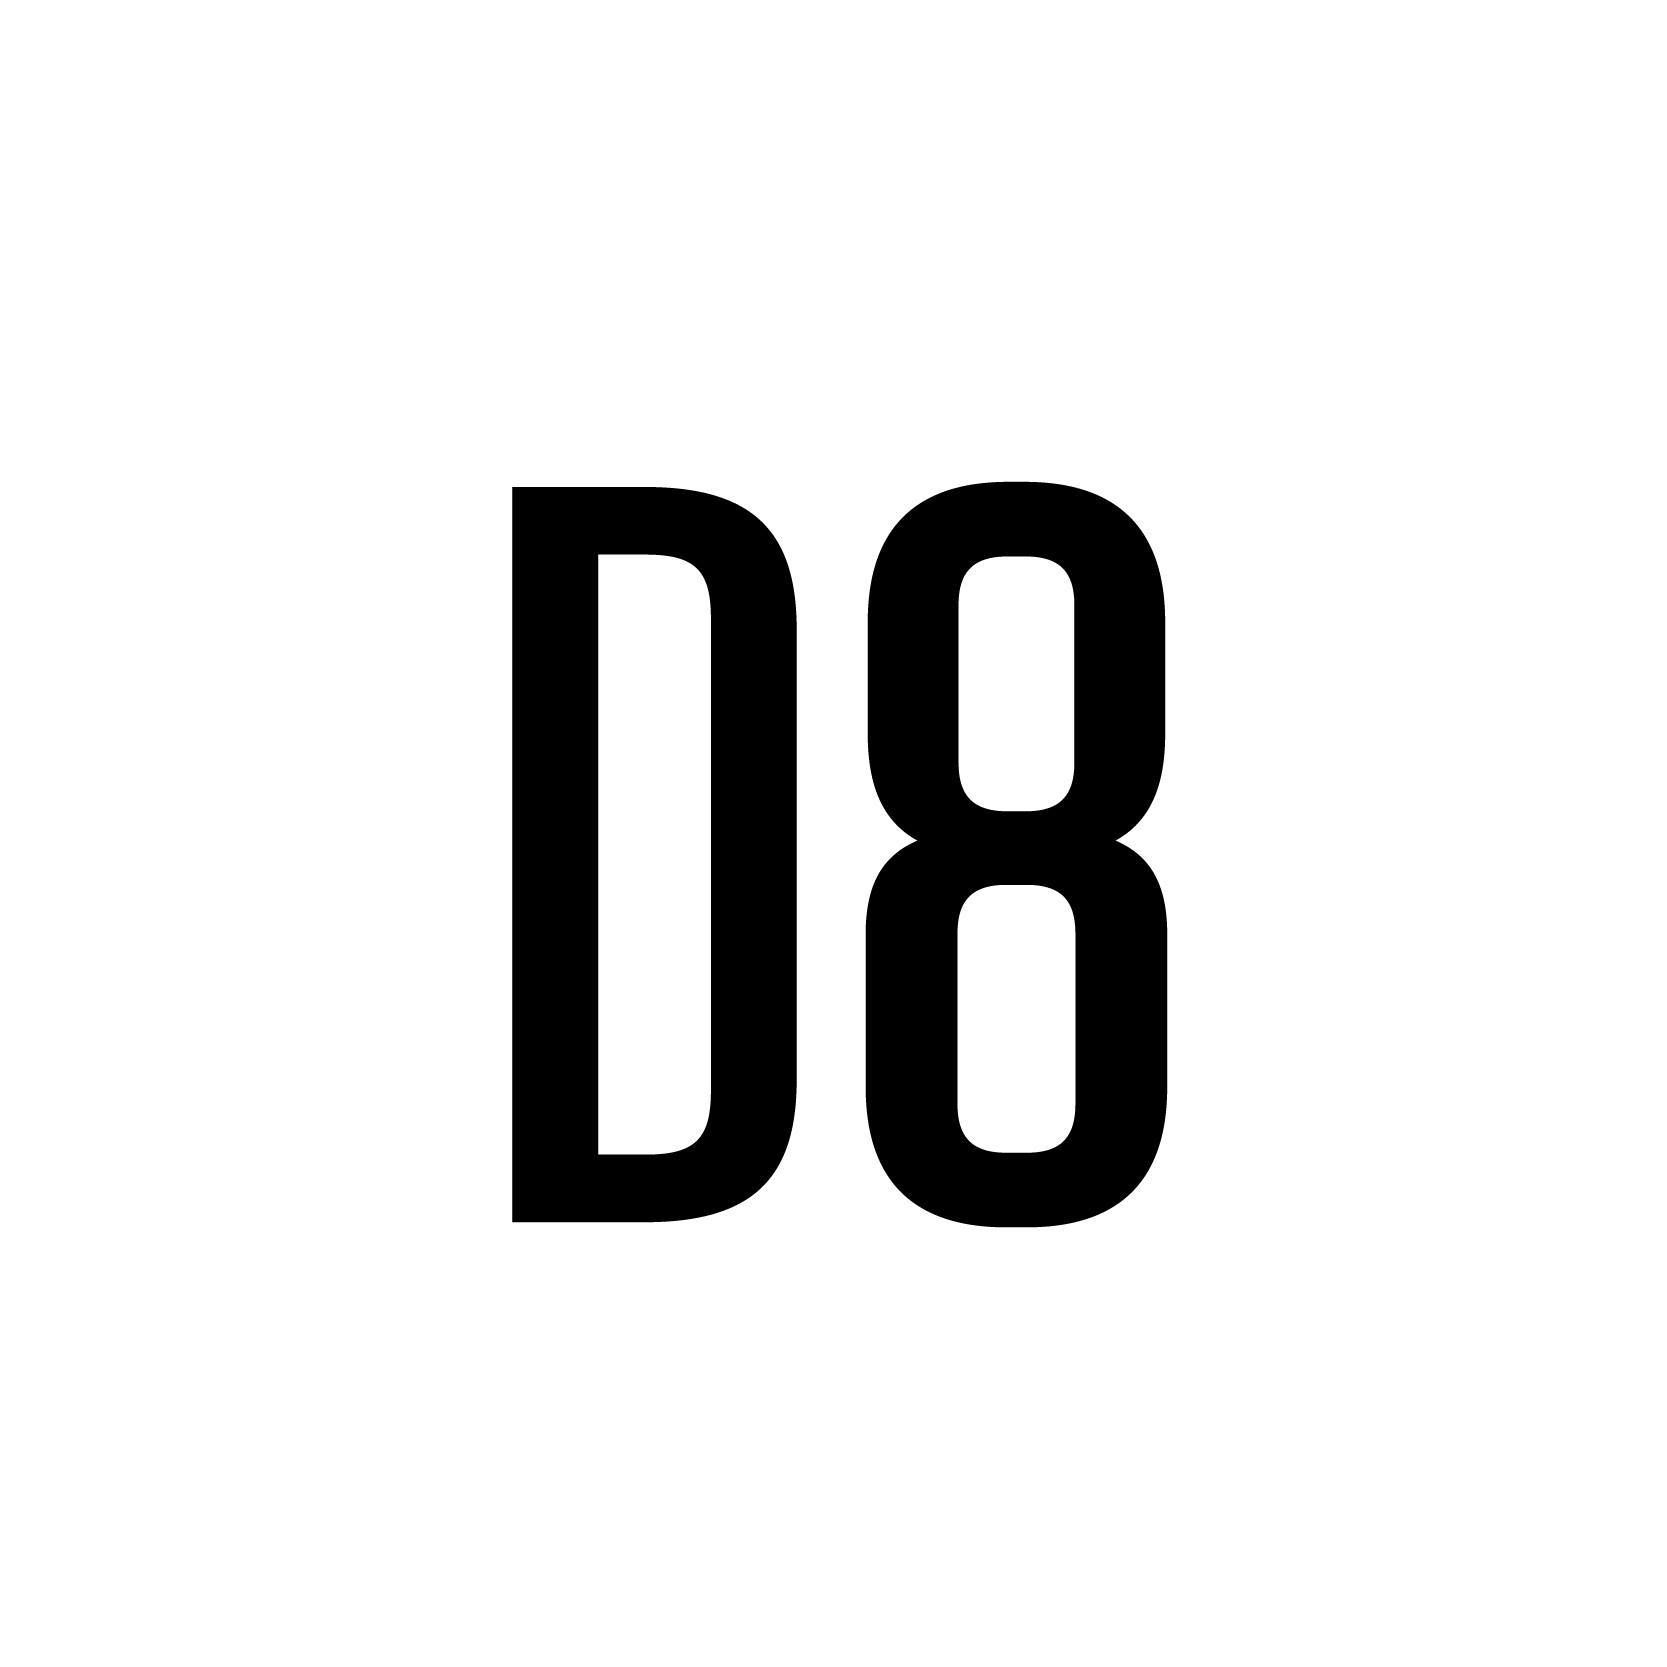 District Eight logo